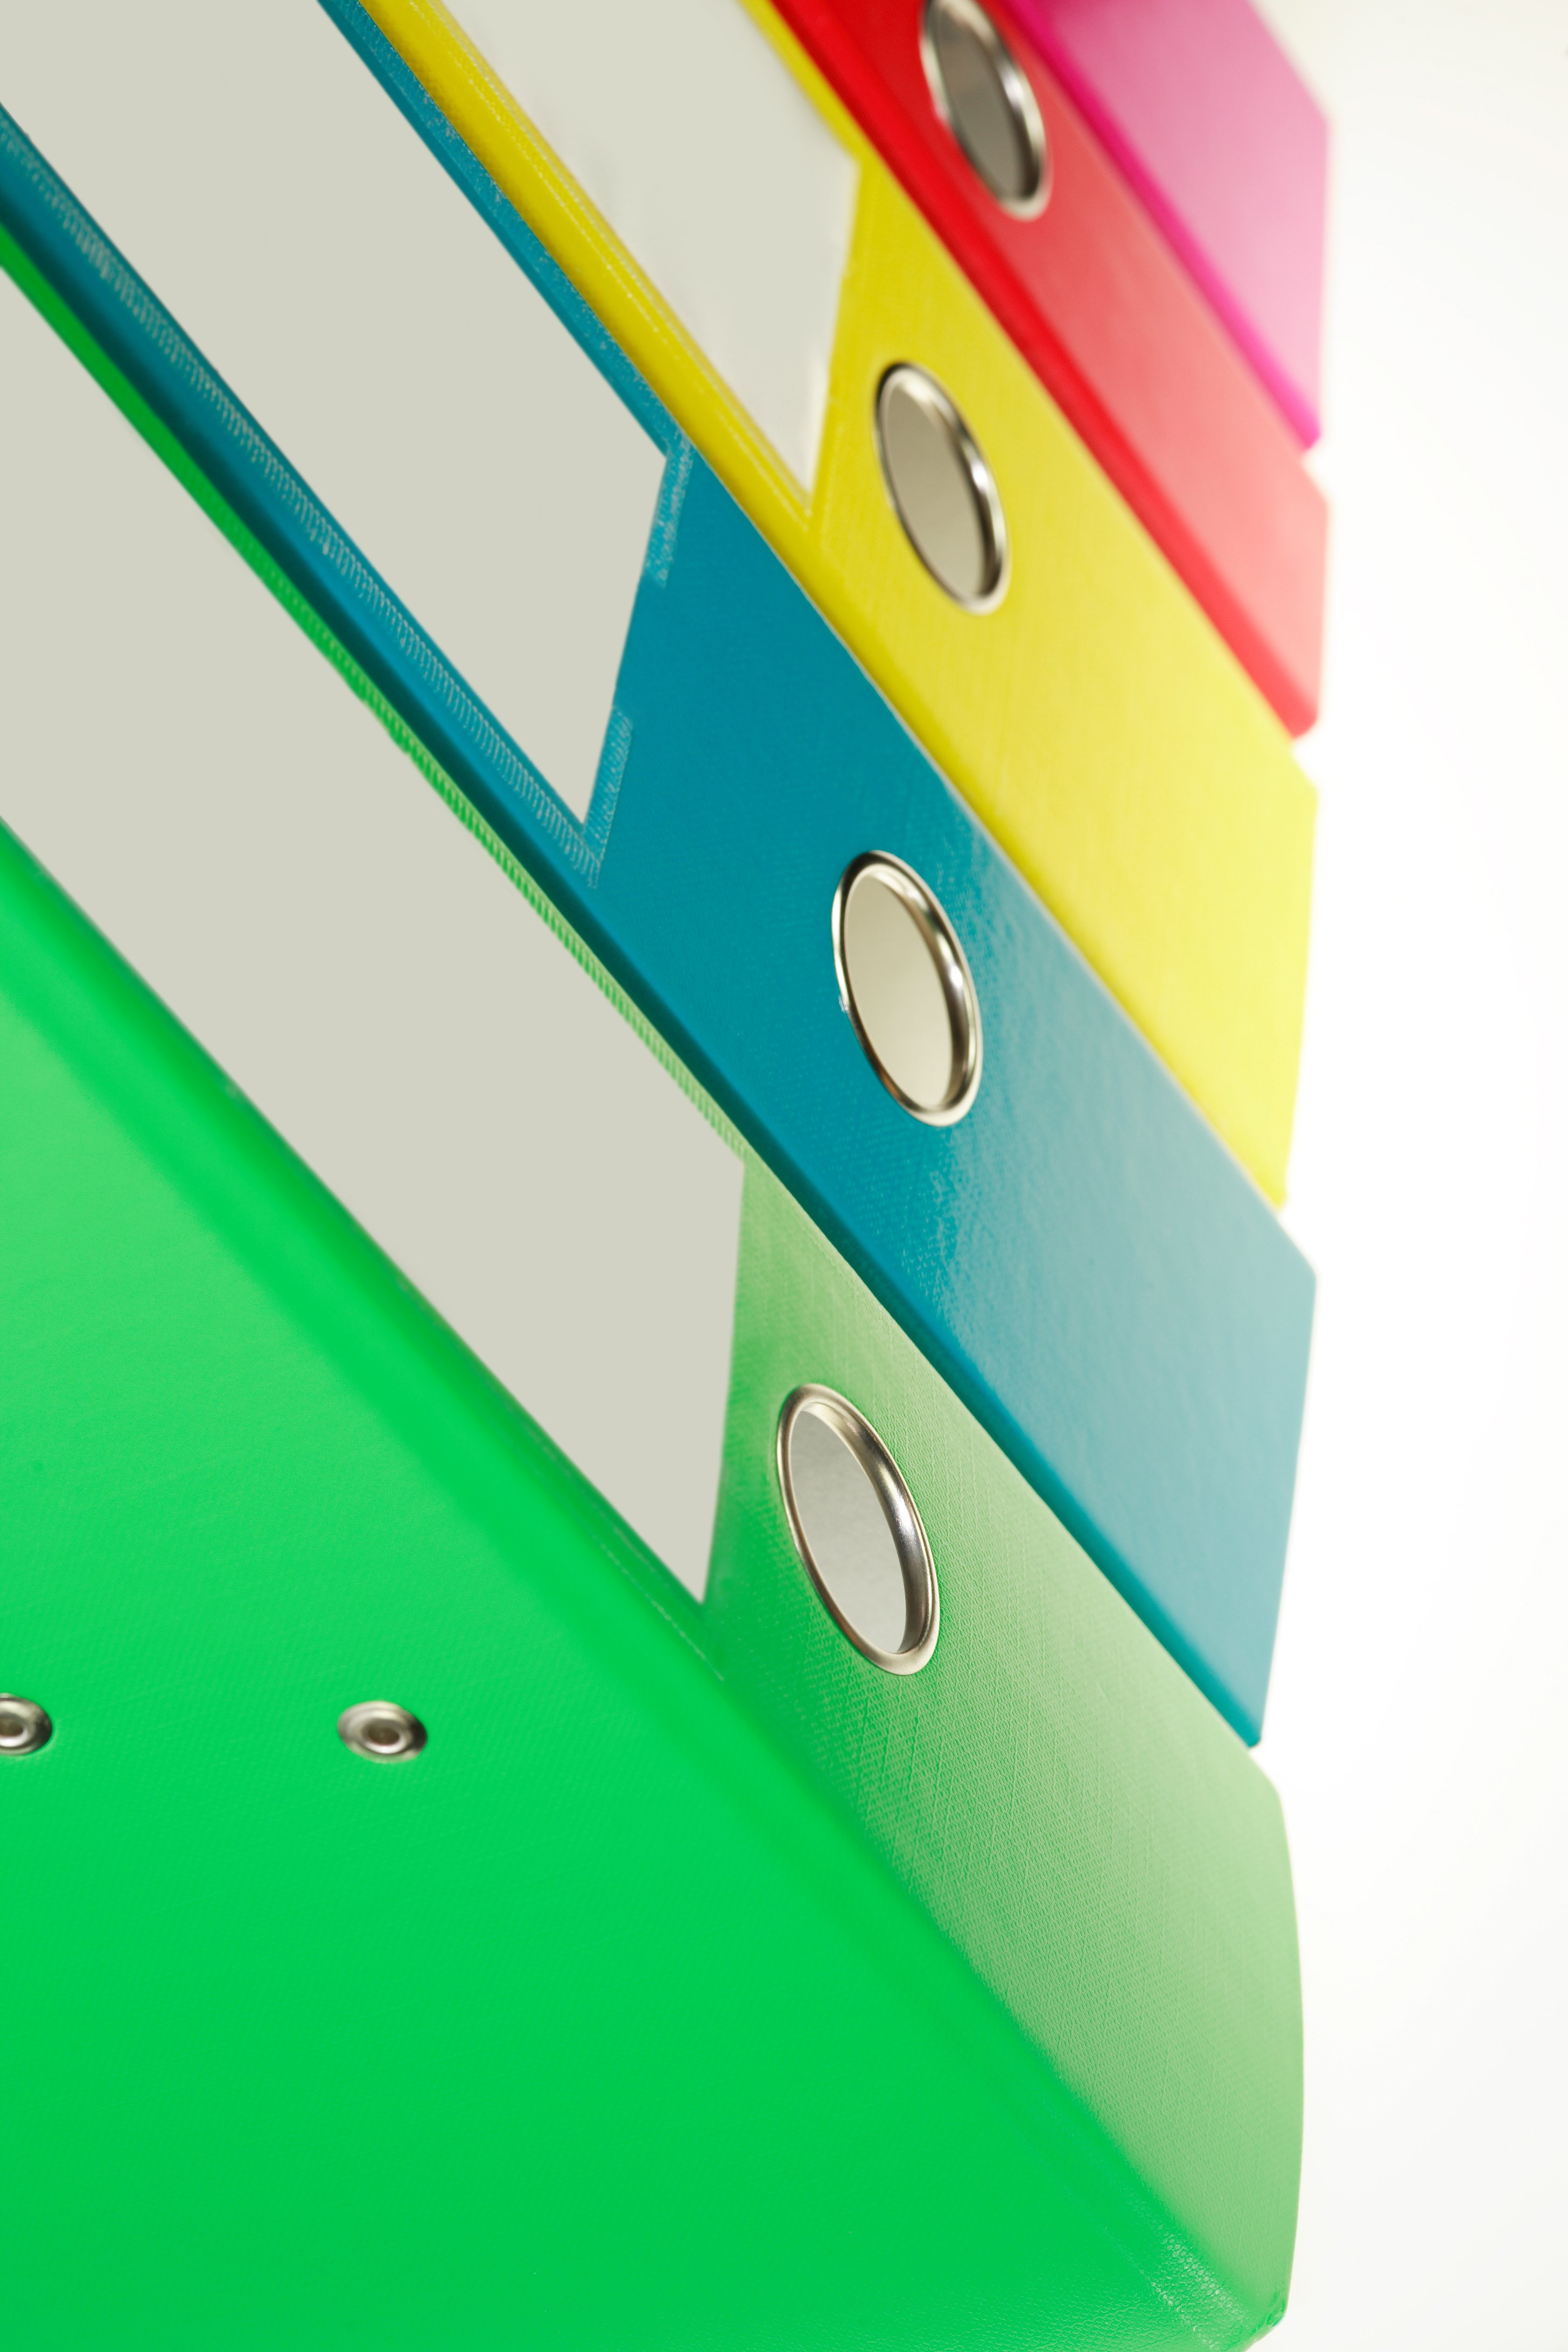 colorful-binders